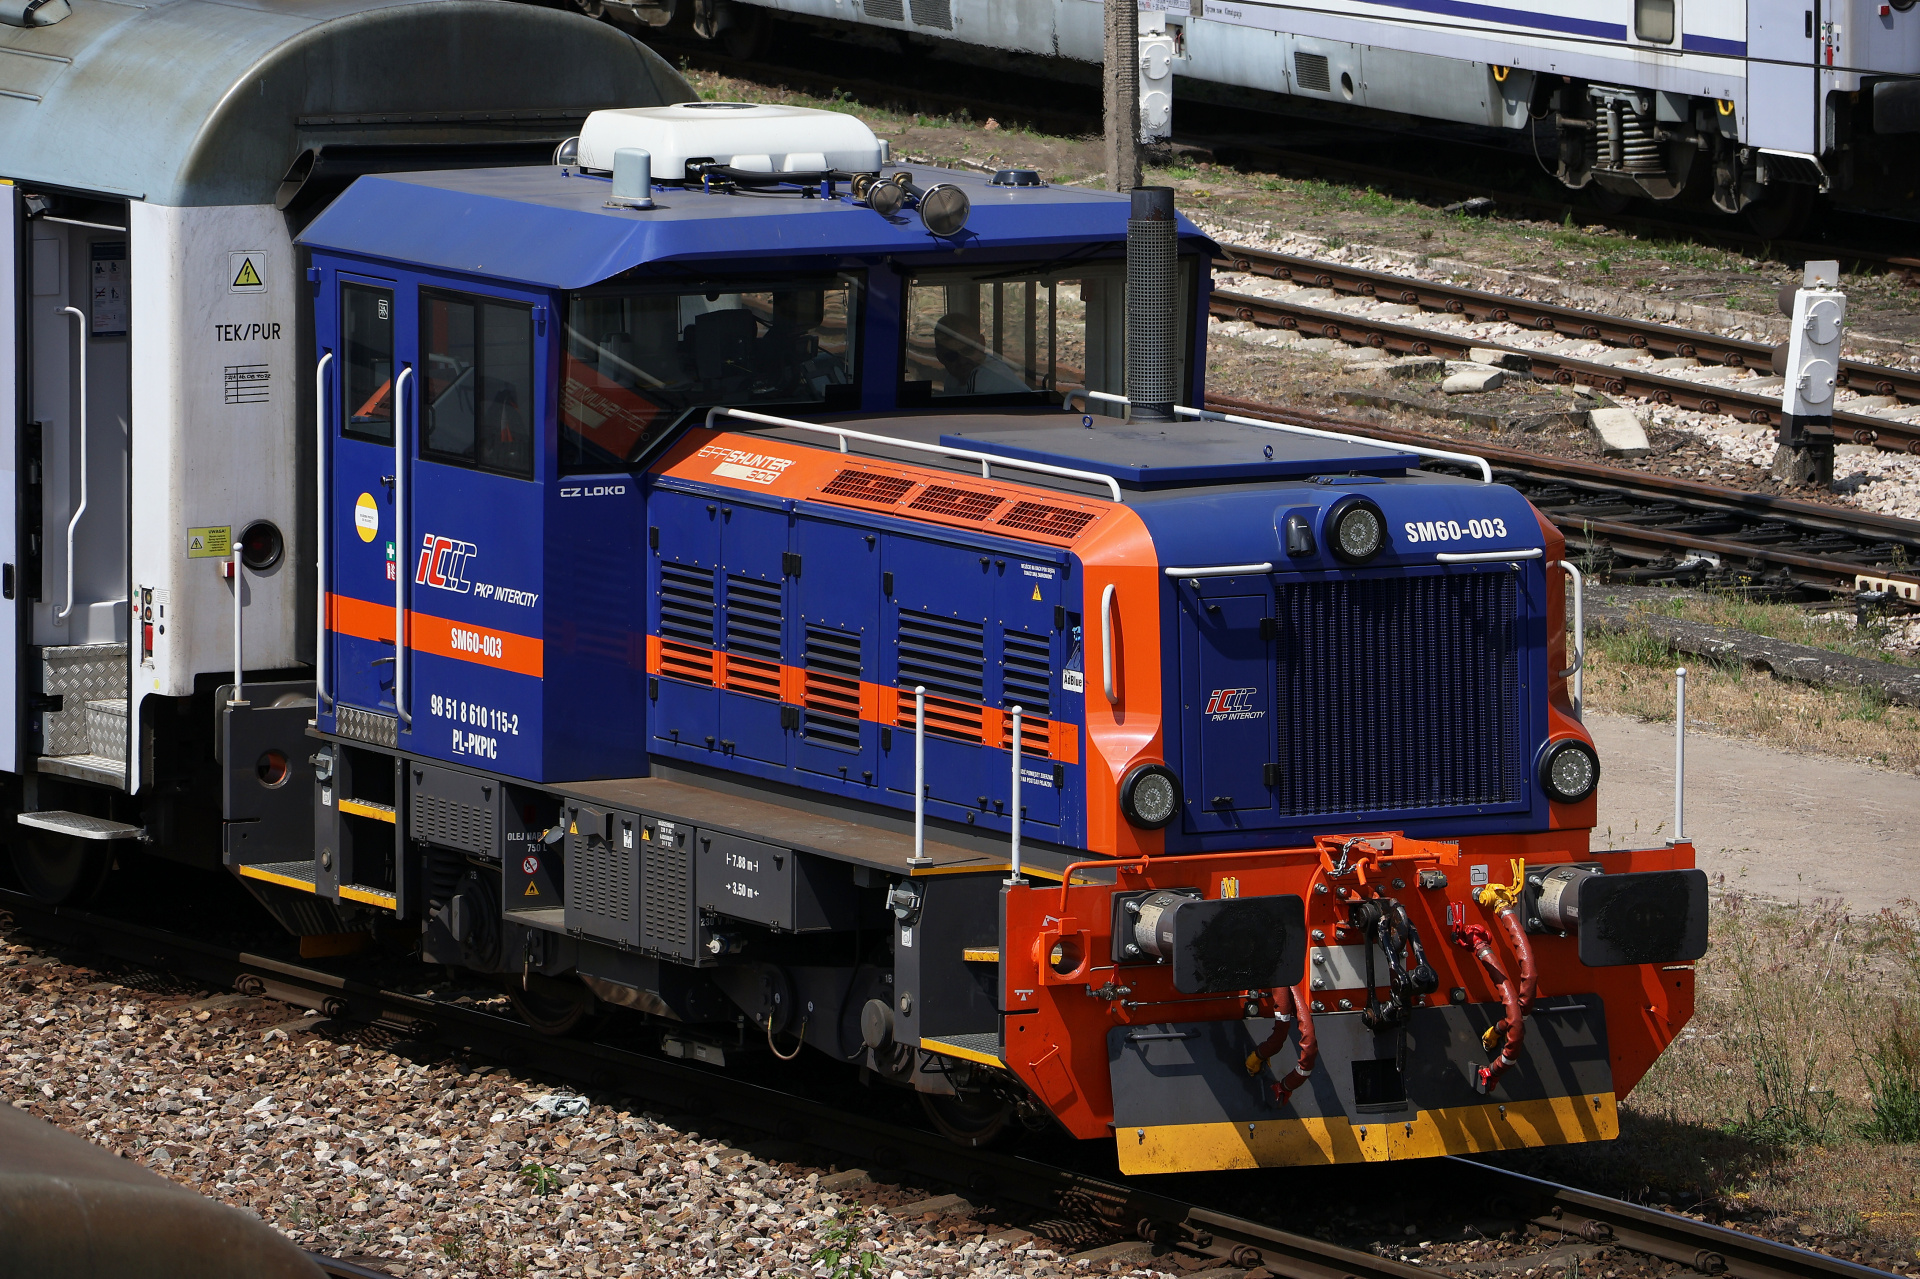 CZ Loko EffiShunter 300 SM60-003 (Vehicles » Trains and Locomotives)